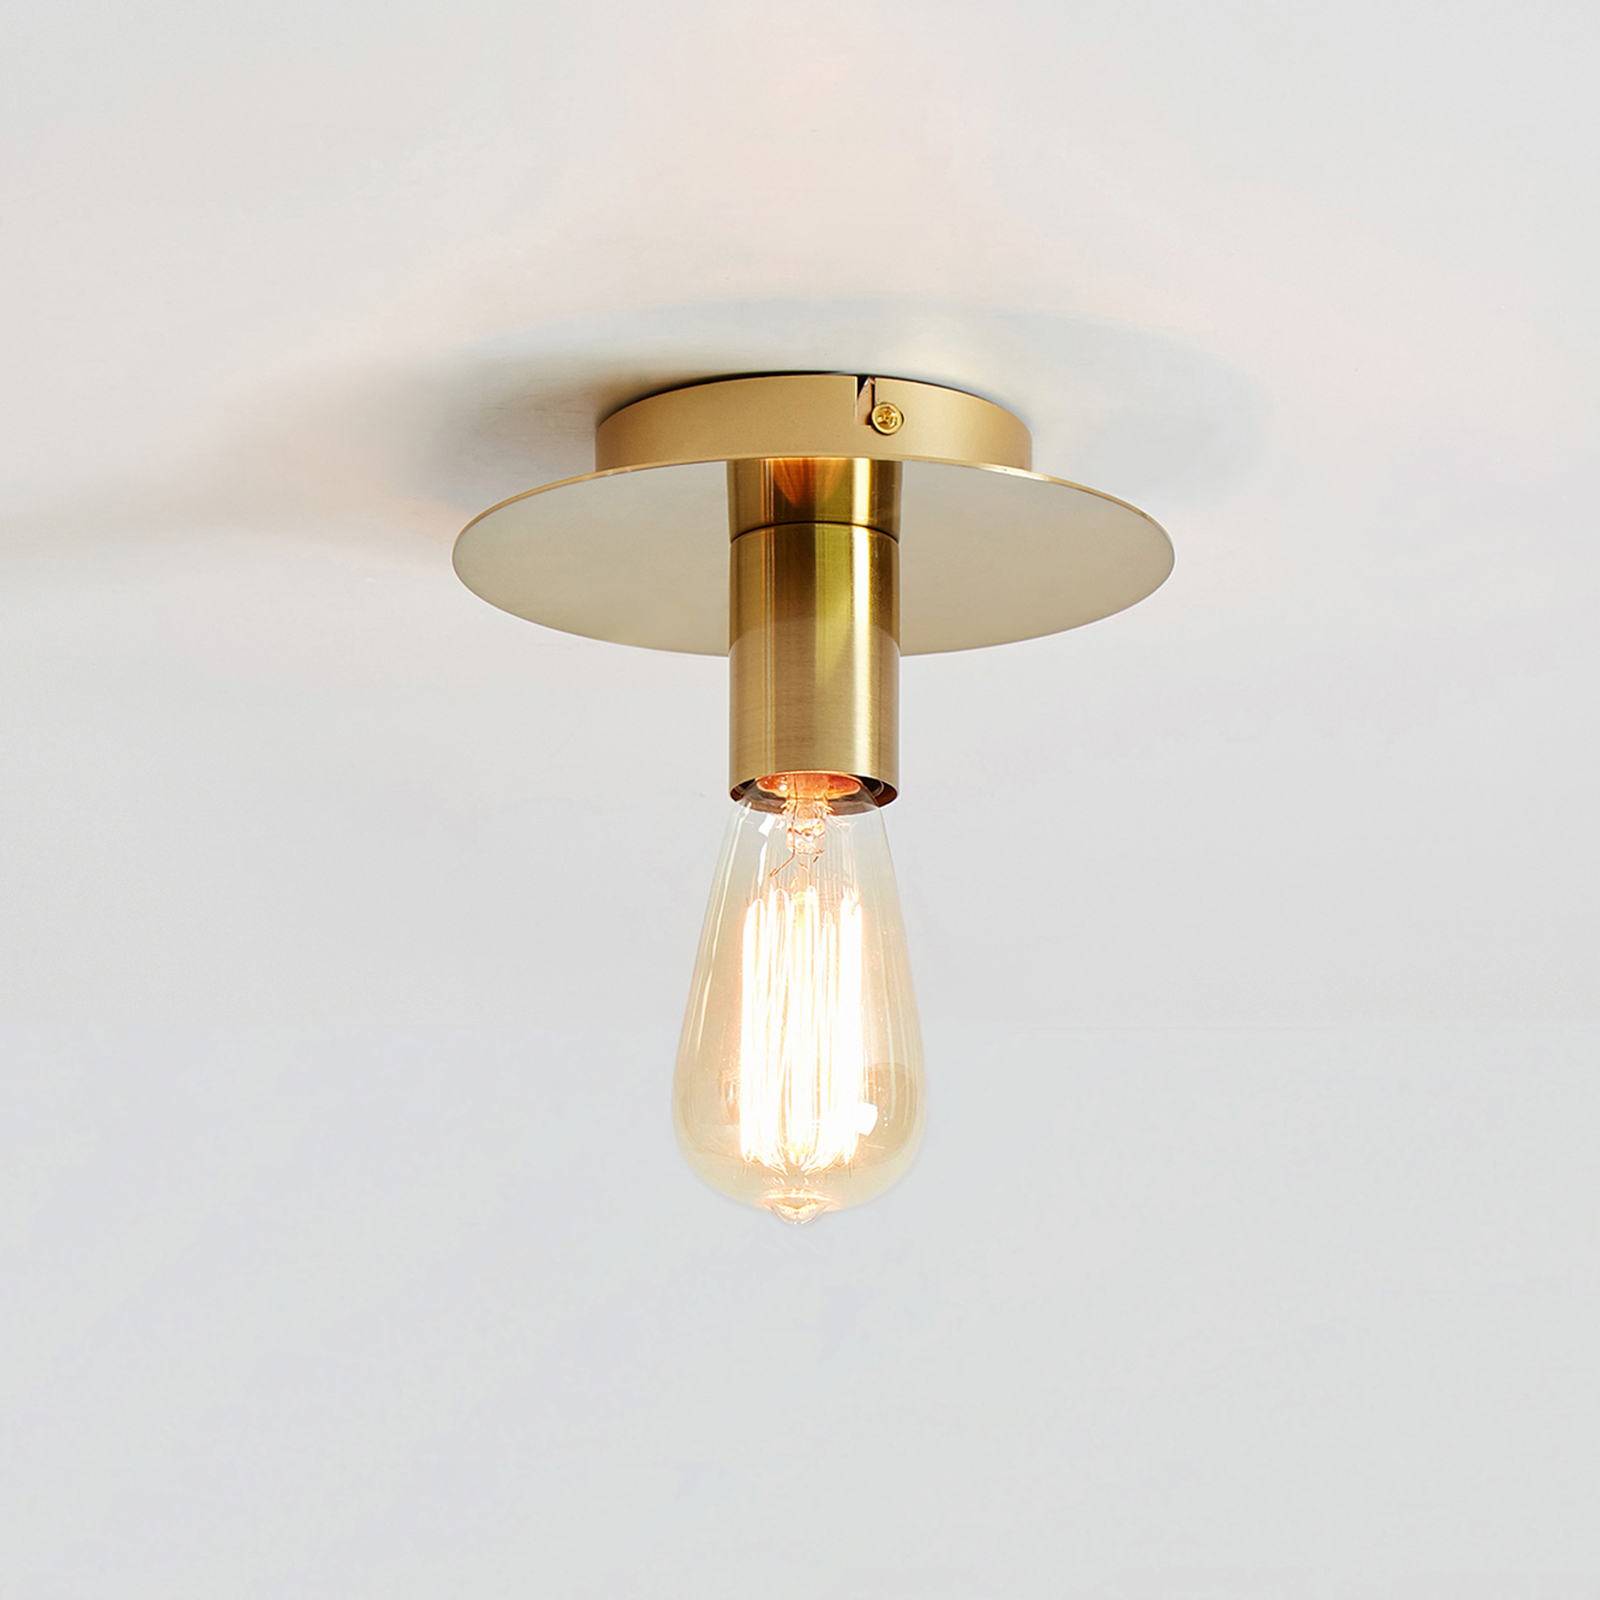 Piatto ceiling light, exposed bulb, E27, brass